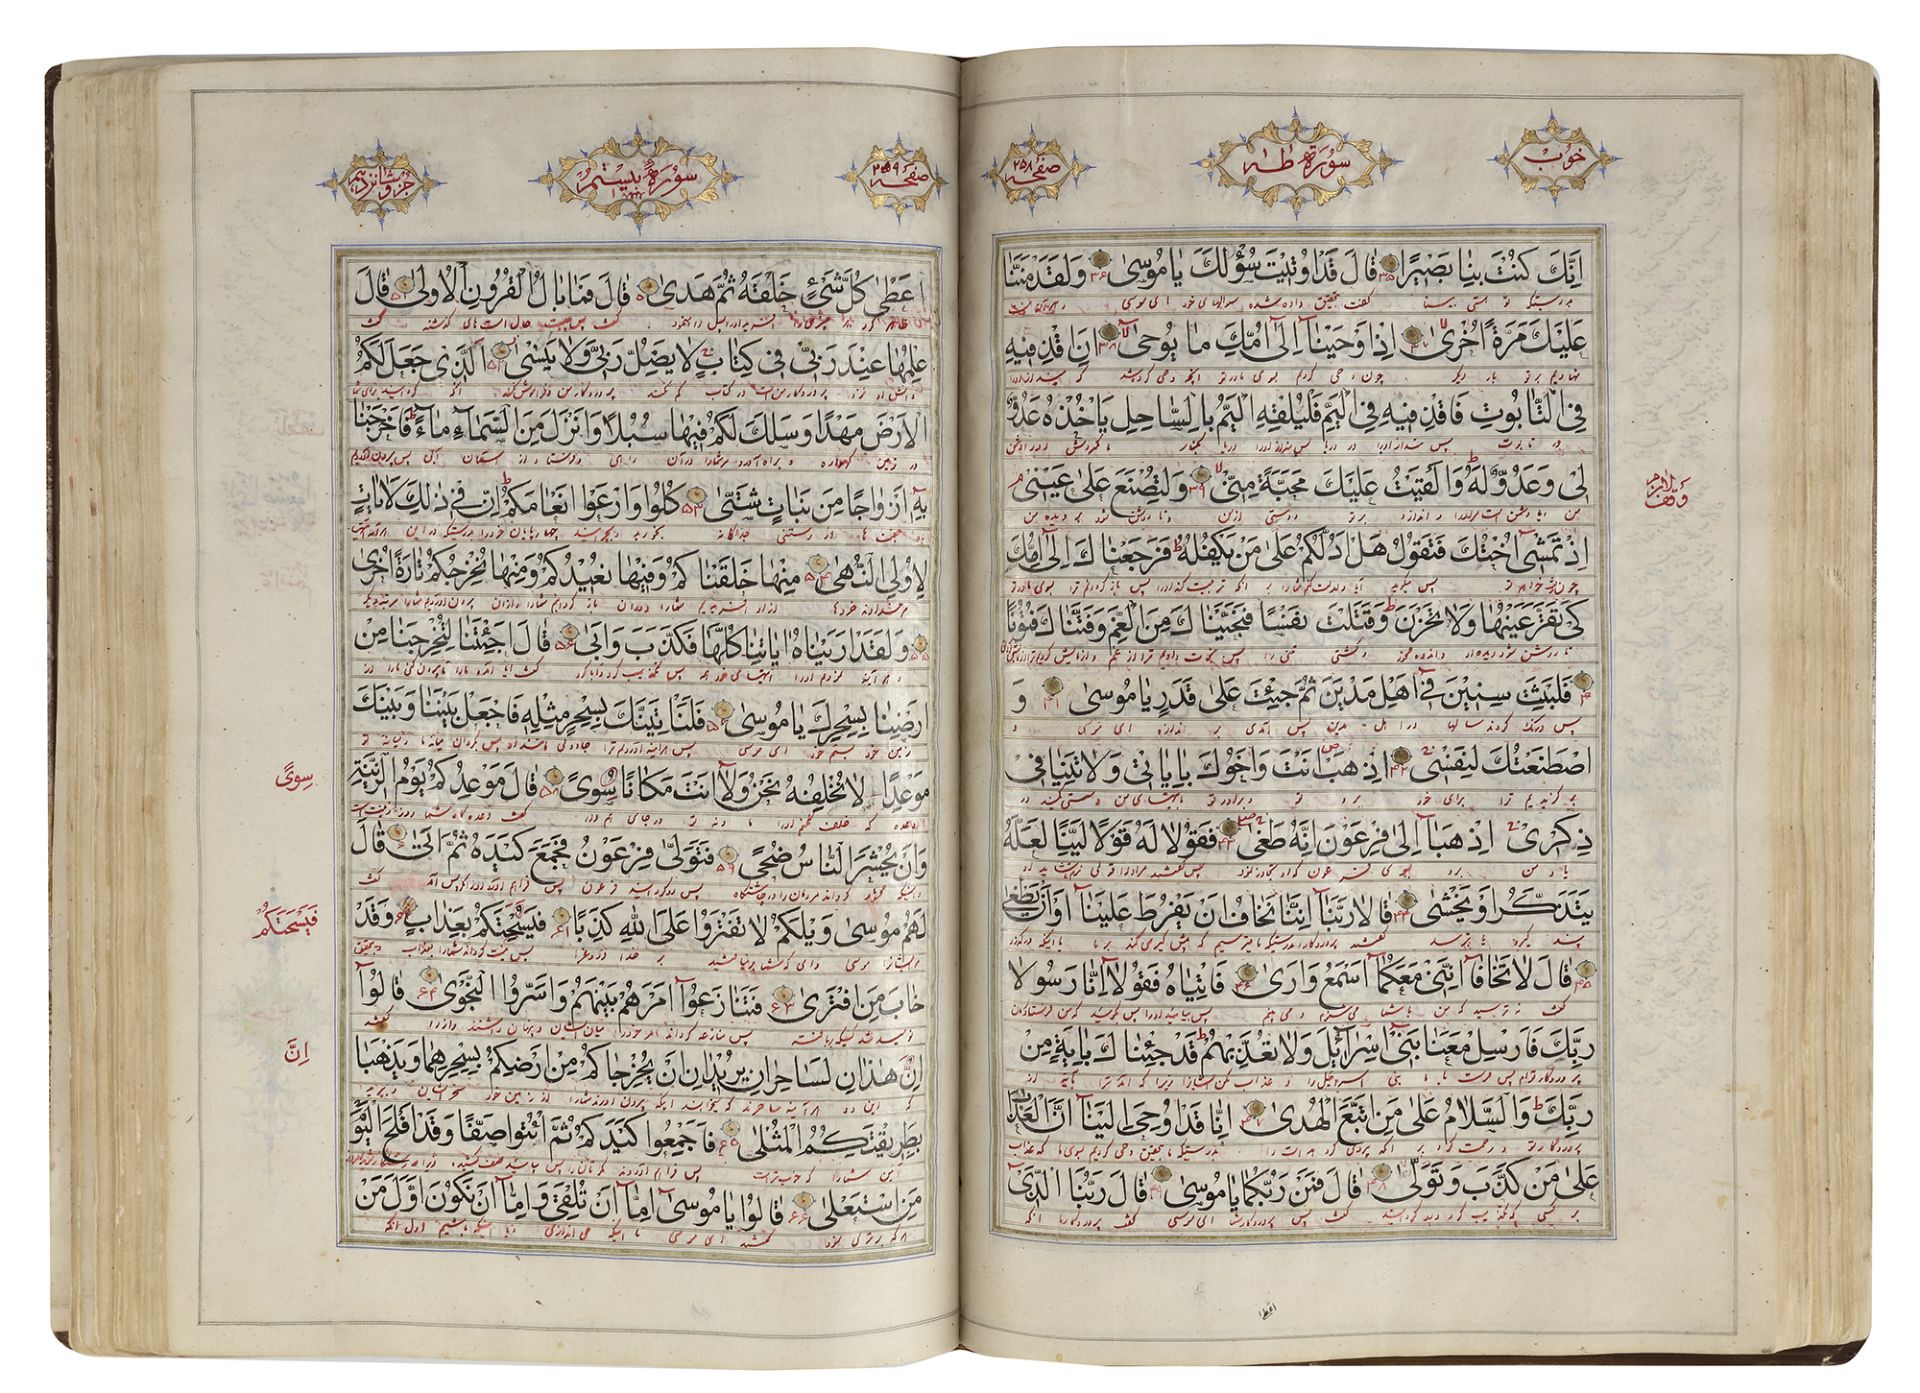 AN ILLUMINATED QAJAR QURAN WRITTEN FOR ABDULLAH KHAN AMIR NIZAM QARAGOZLU, PERSIA, 1319 AH/1901 AD - Image 4 of 4